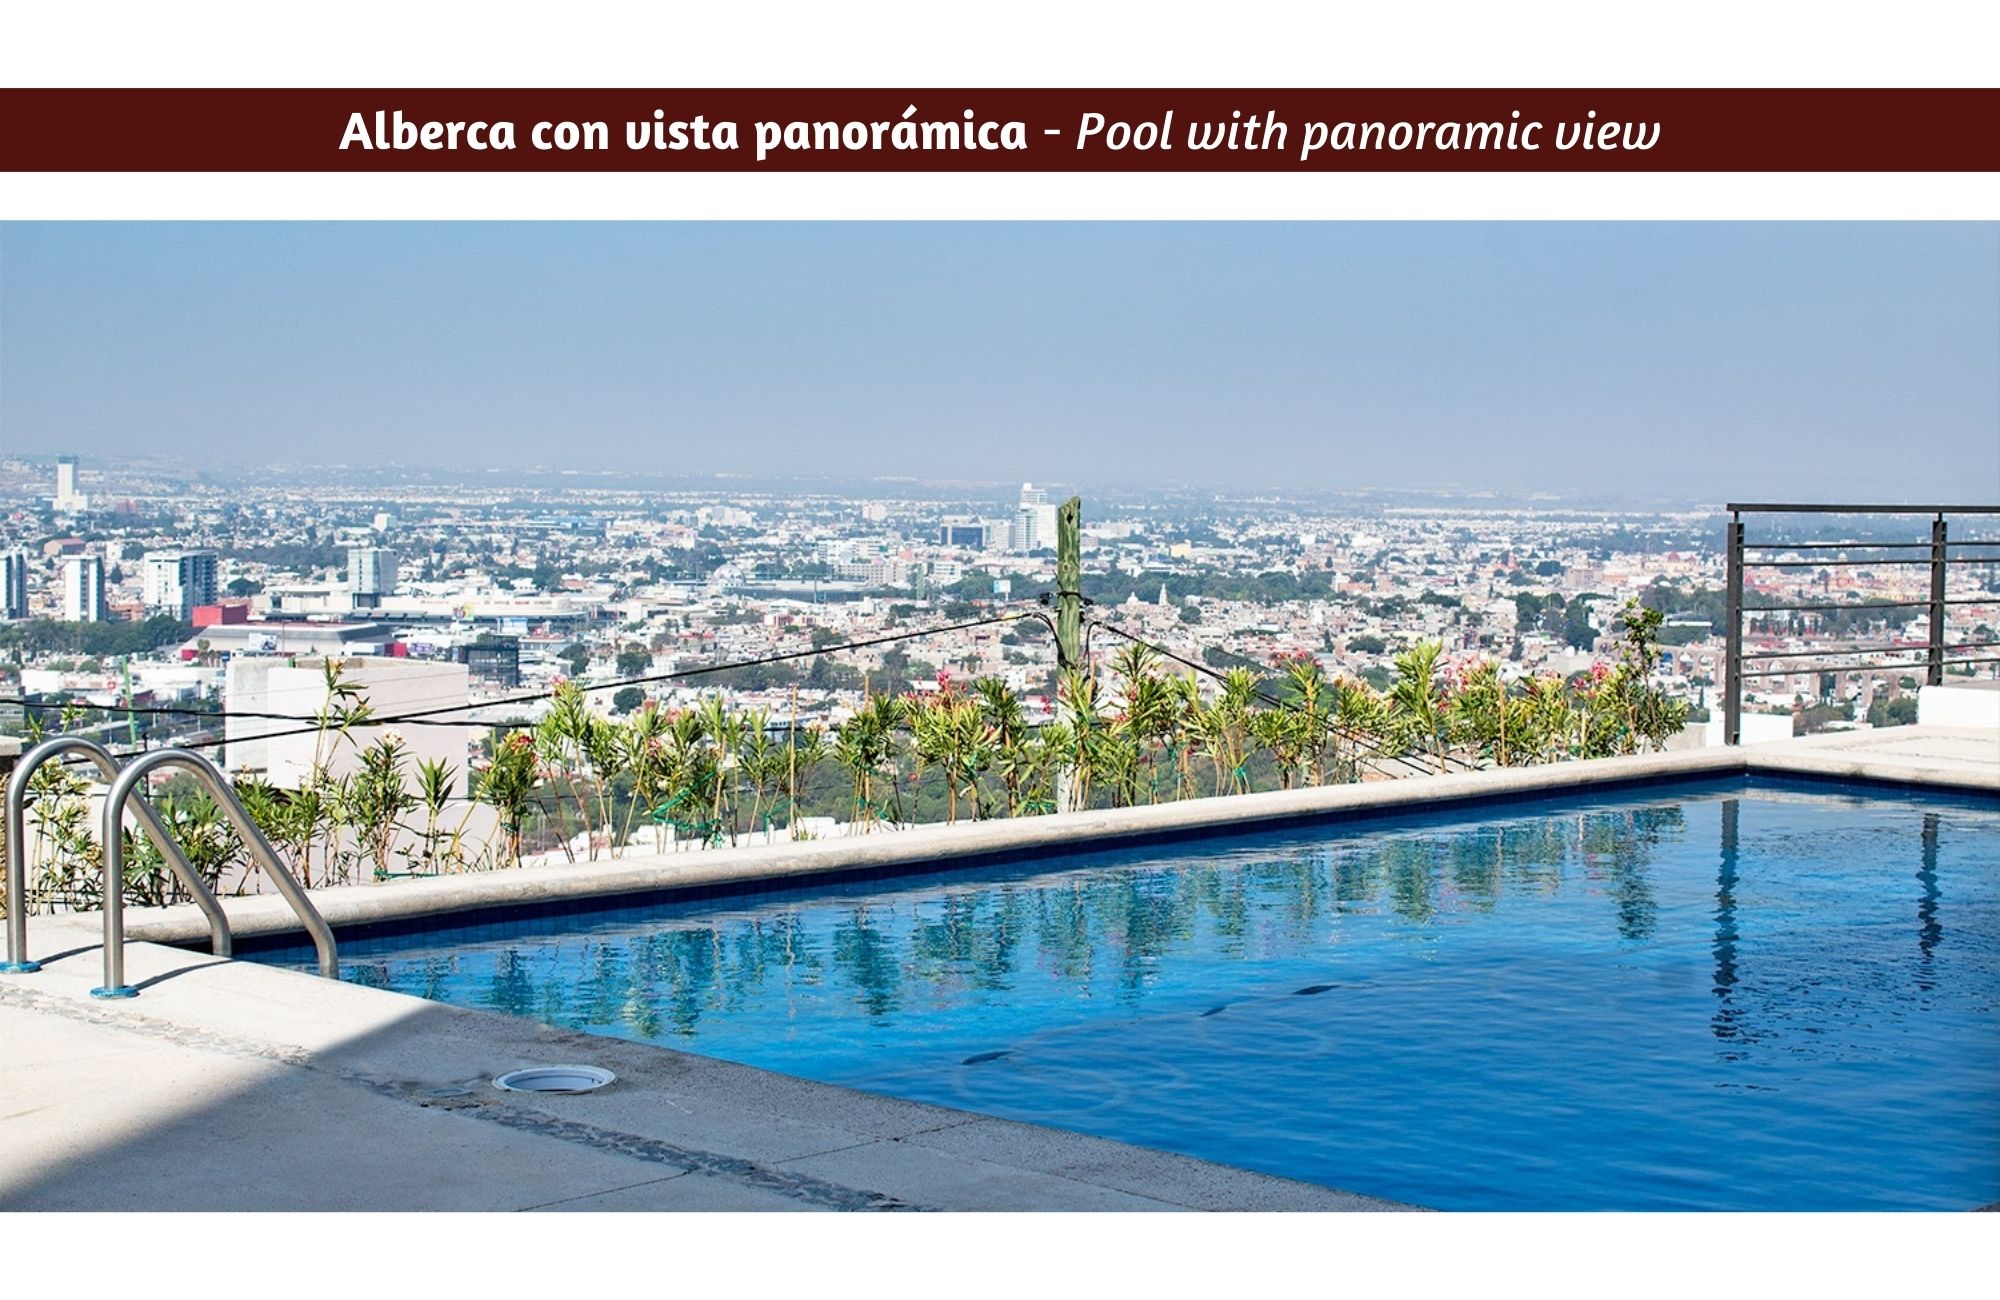 Apartment with terrace, laundry room, pool, gym, pre-construction, Zibata, Querétaro.